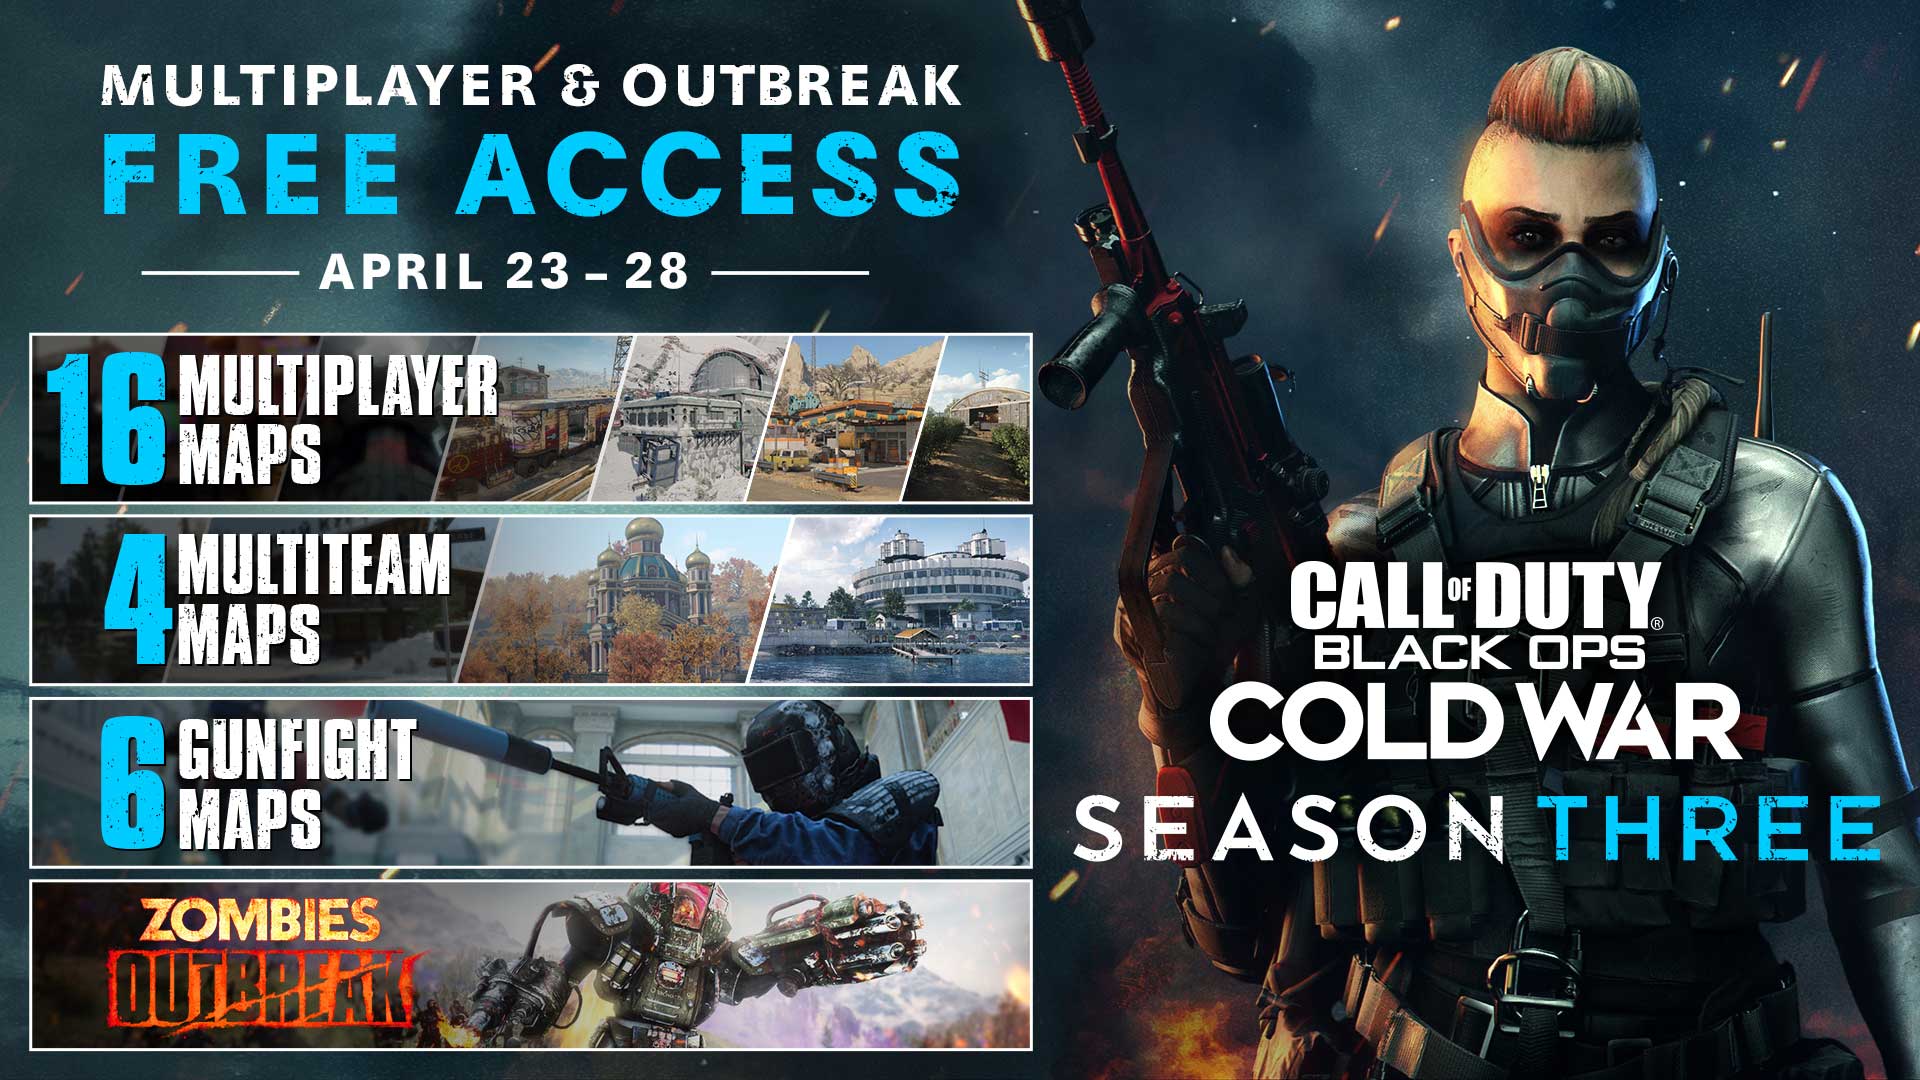 Jogue a 3ª Temporada de Call of Duty: Black Ops Cold War de graça a partir de 23 de abril